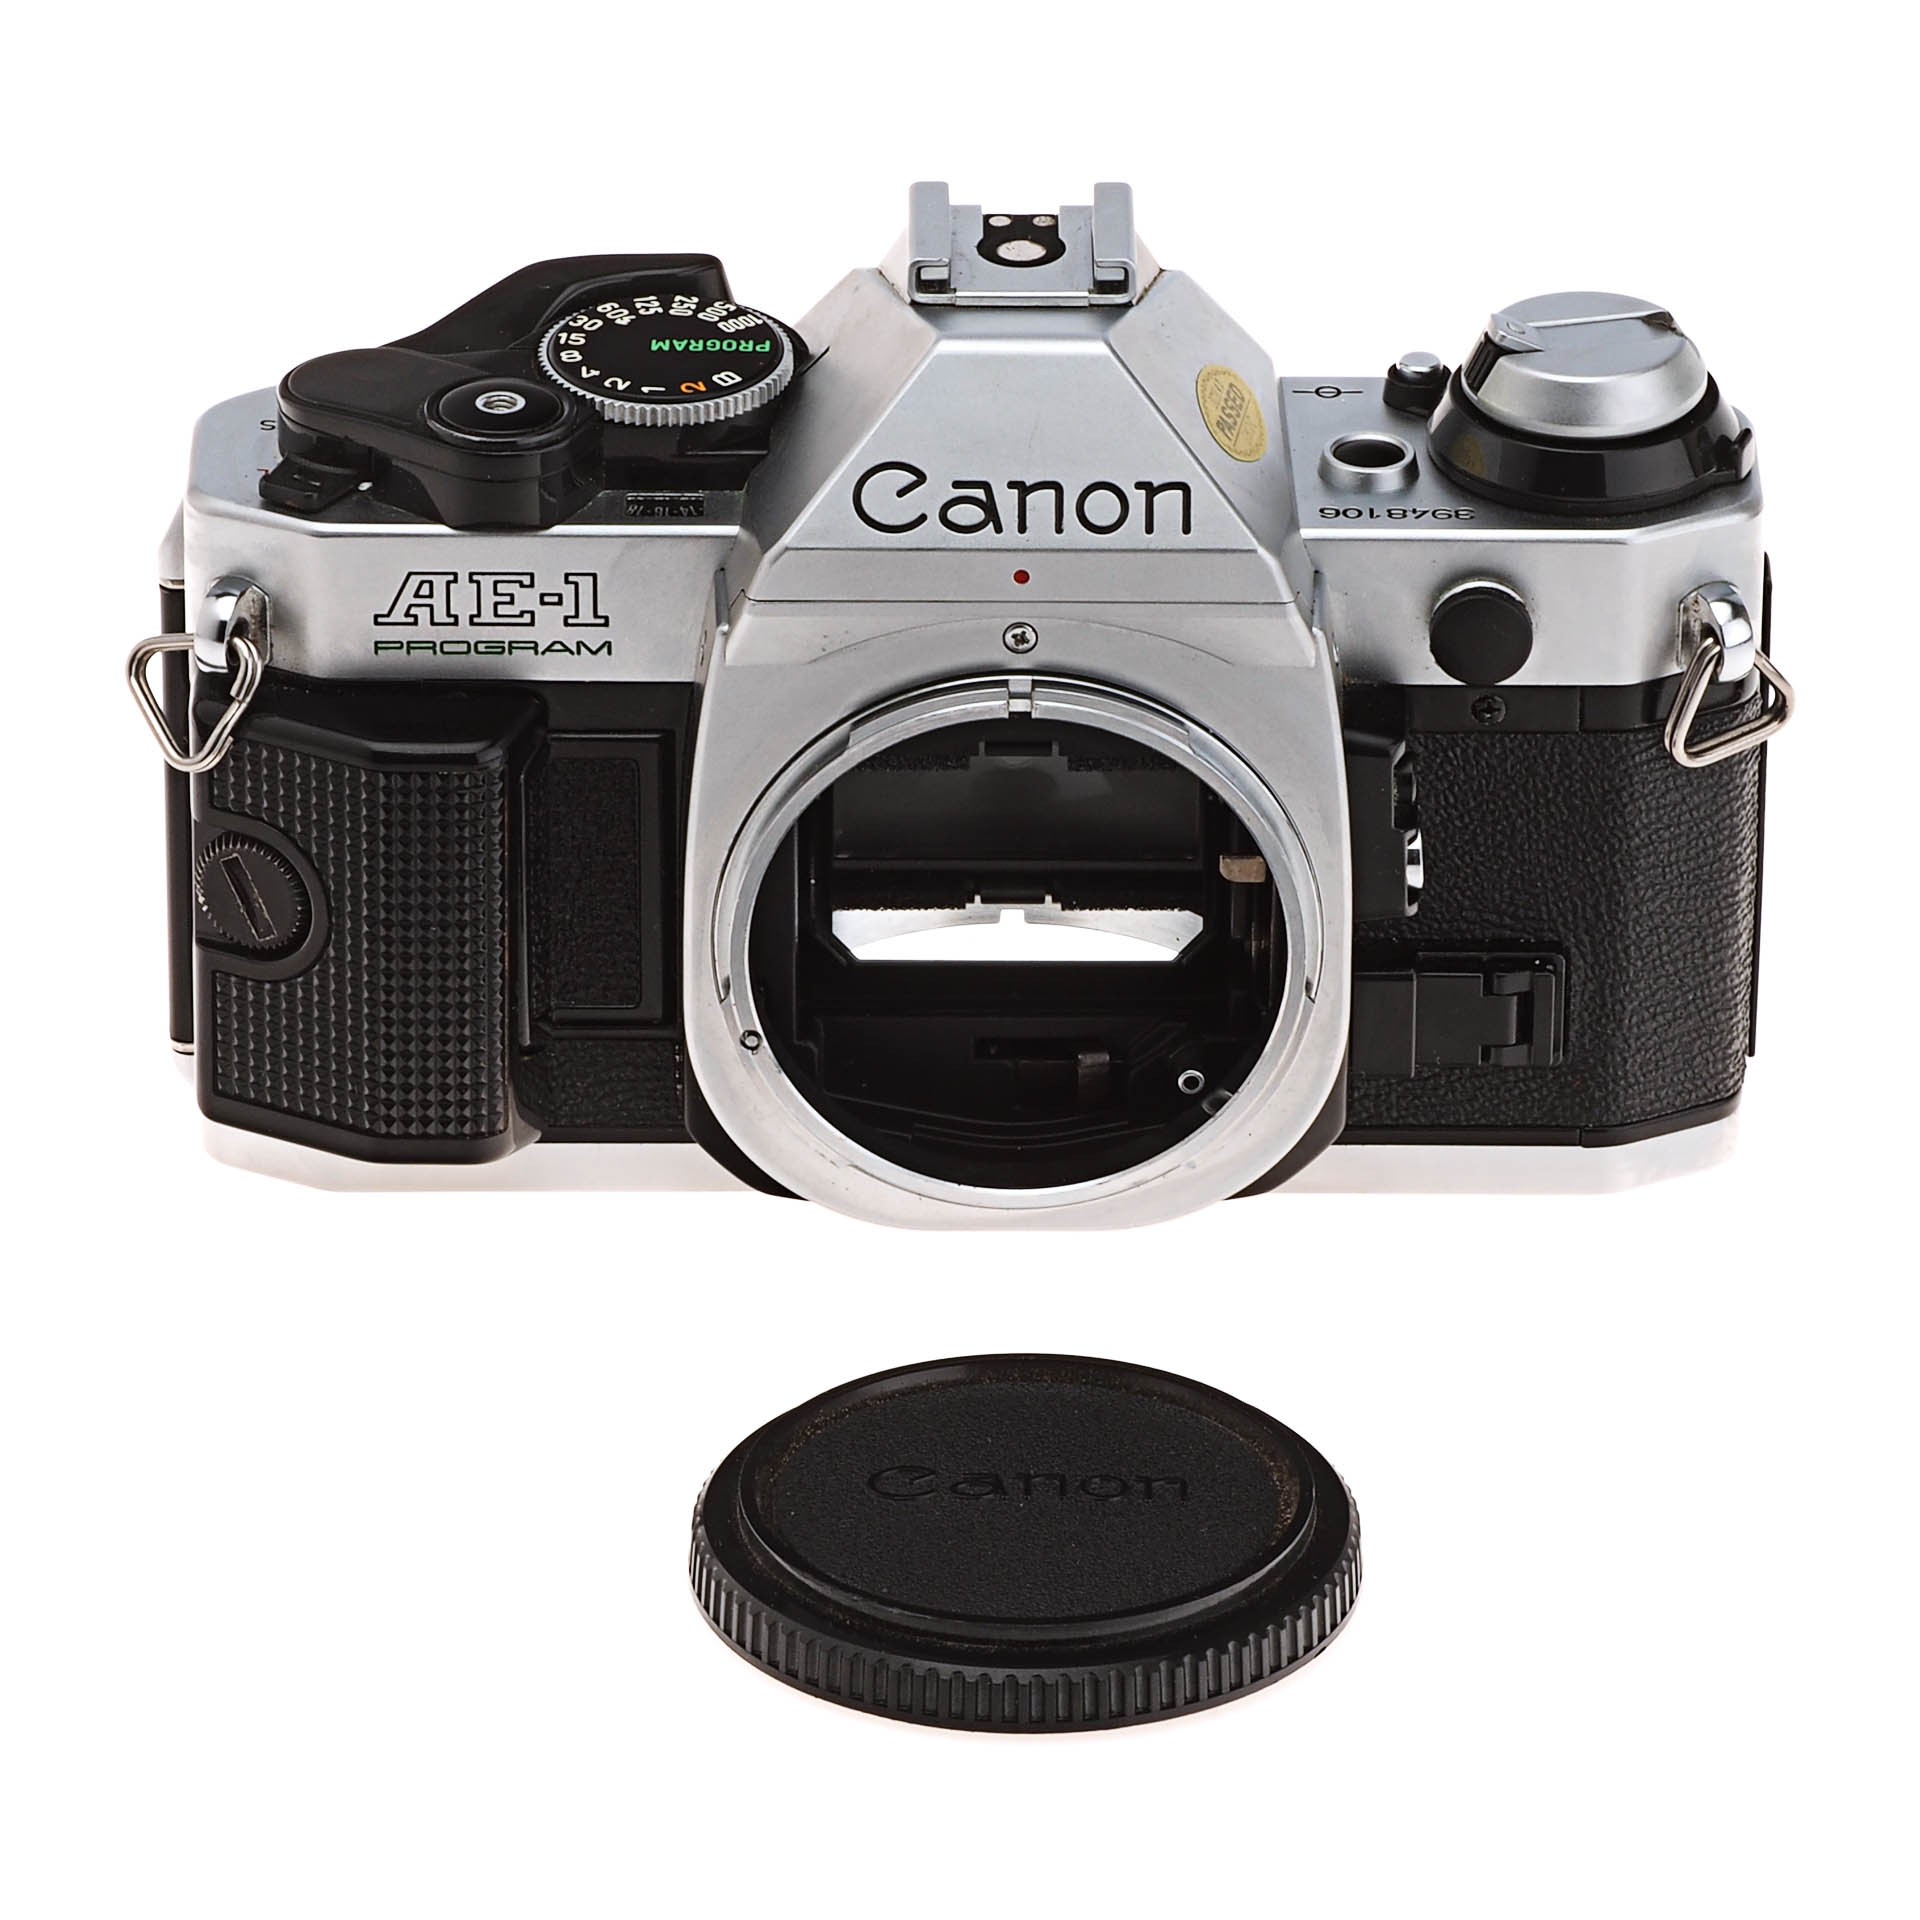 Westers Eik Leven van Buy Canon AE-1 Program 35mm Film SLR Camera Body - National Camera Exchange